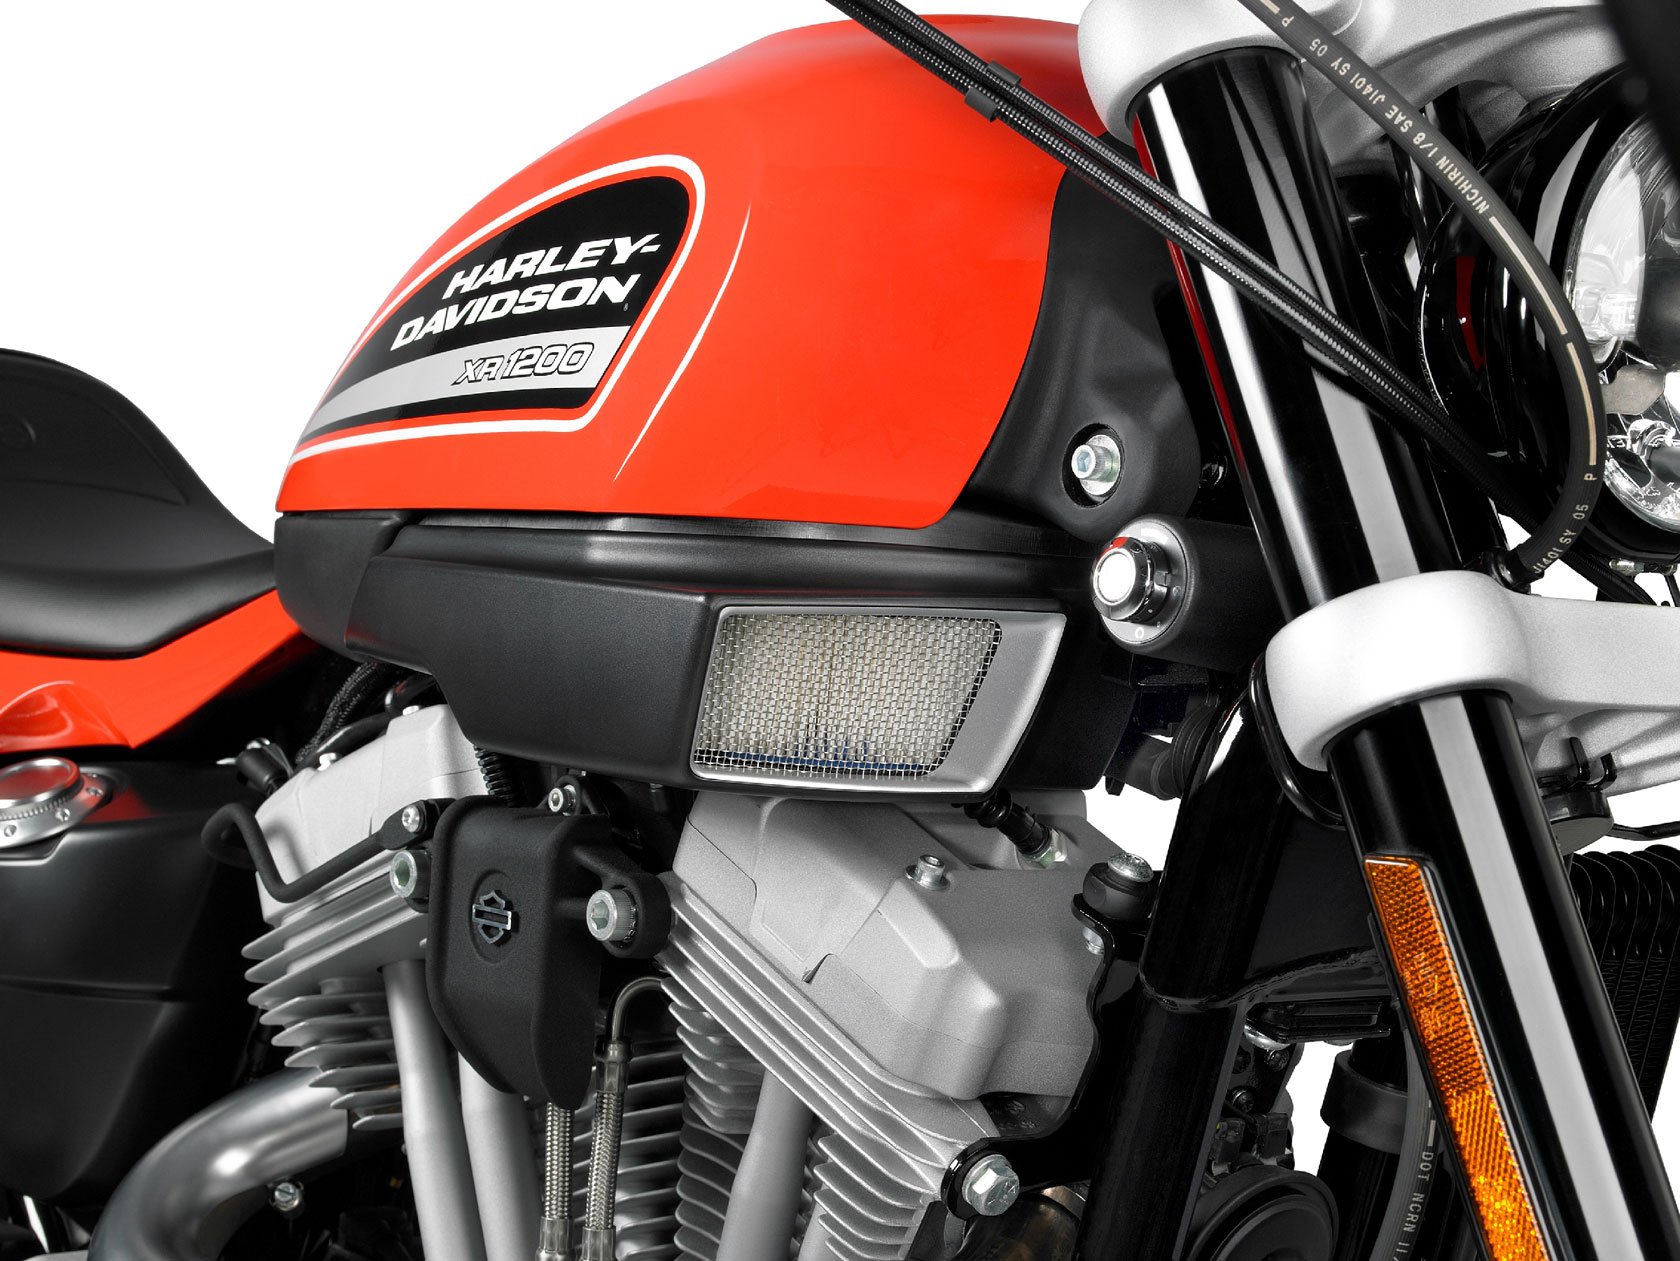 2009 Harley Davidson Xr1200